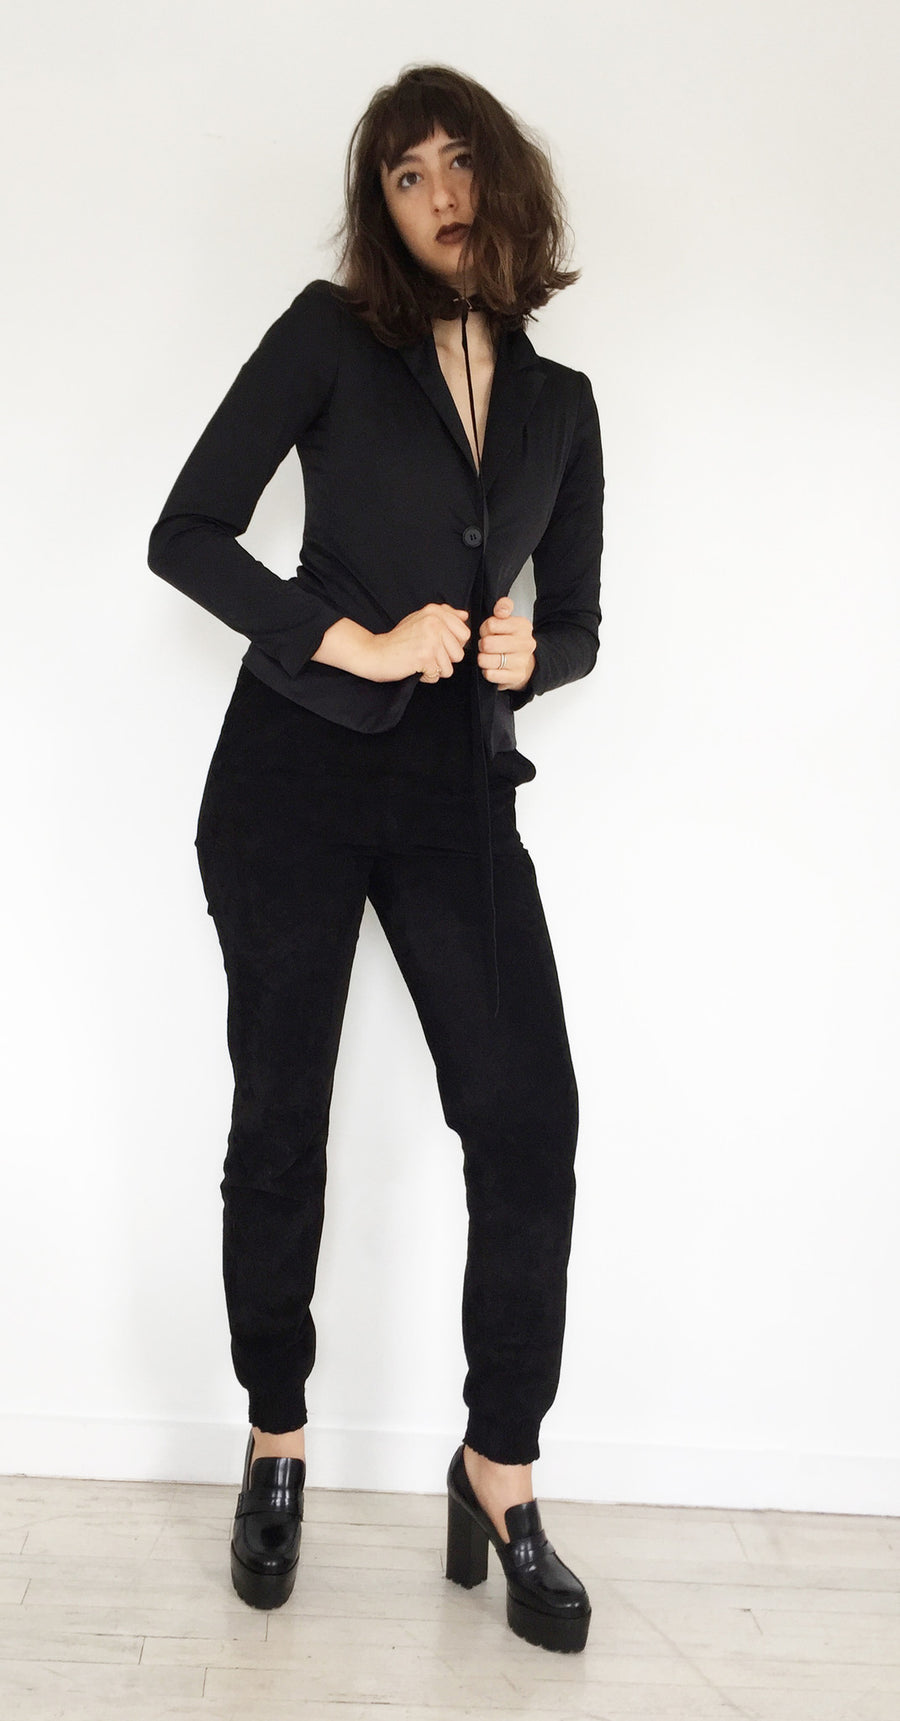 Sofia G Model Wendy Nichol SS17 Fashion Show Leather Choker High Waist Waisted Black Suede Ruche Ankle Skinny Pants